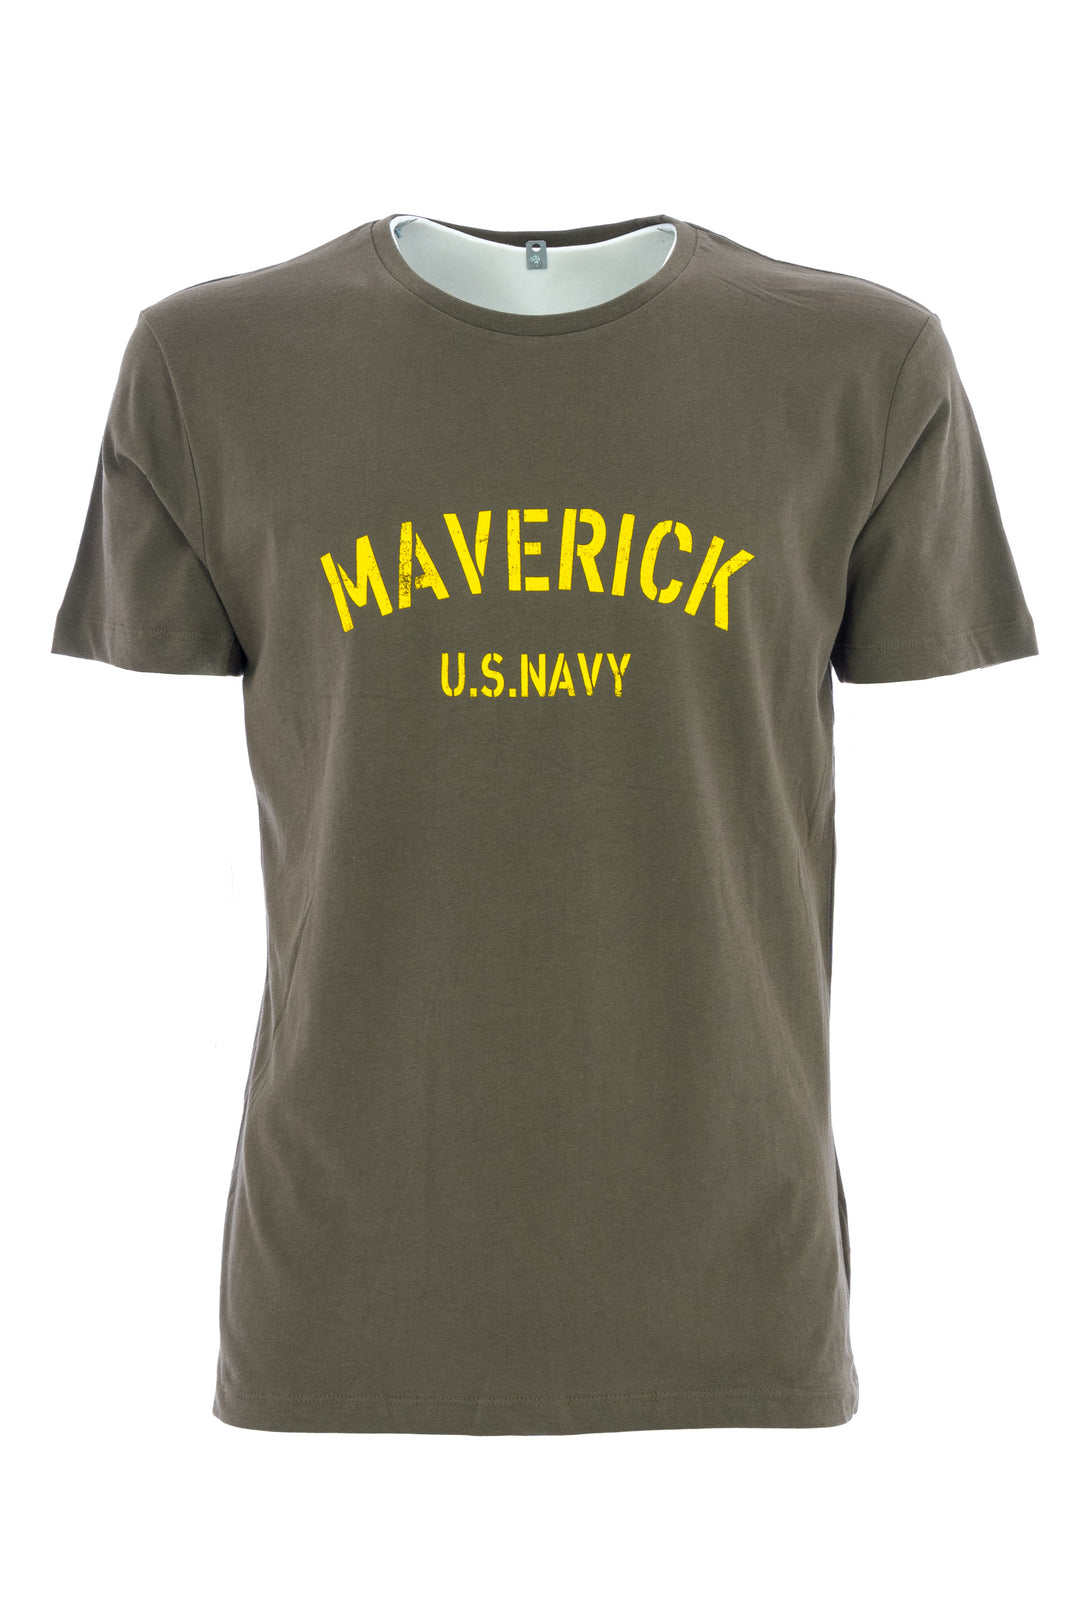 TEN-FIFTEEN T-shirt verde in cotone con stampa maverick - Mancinelli 1954